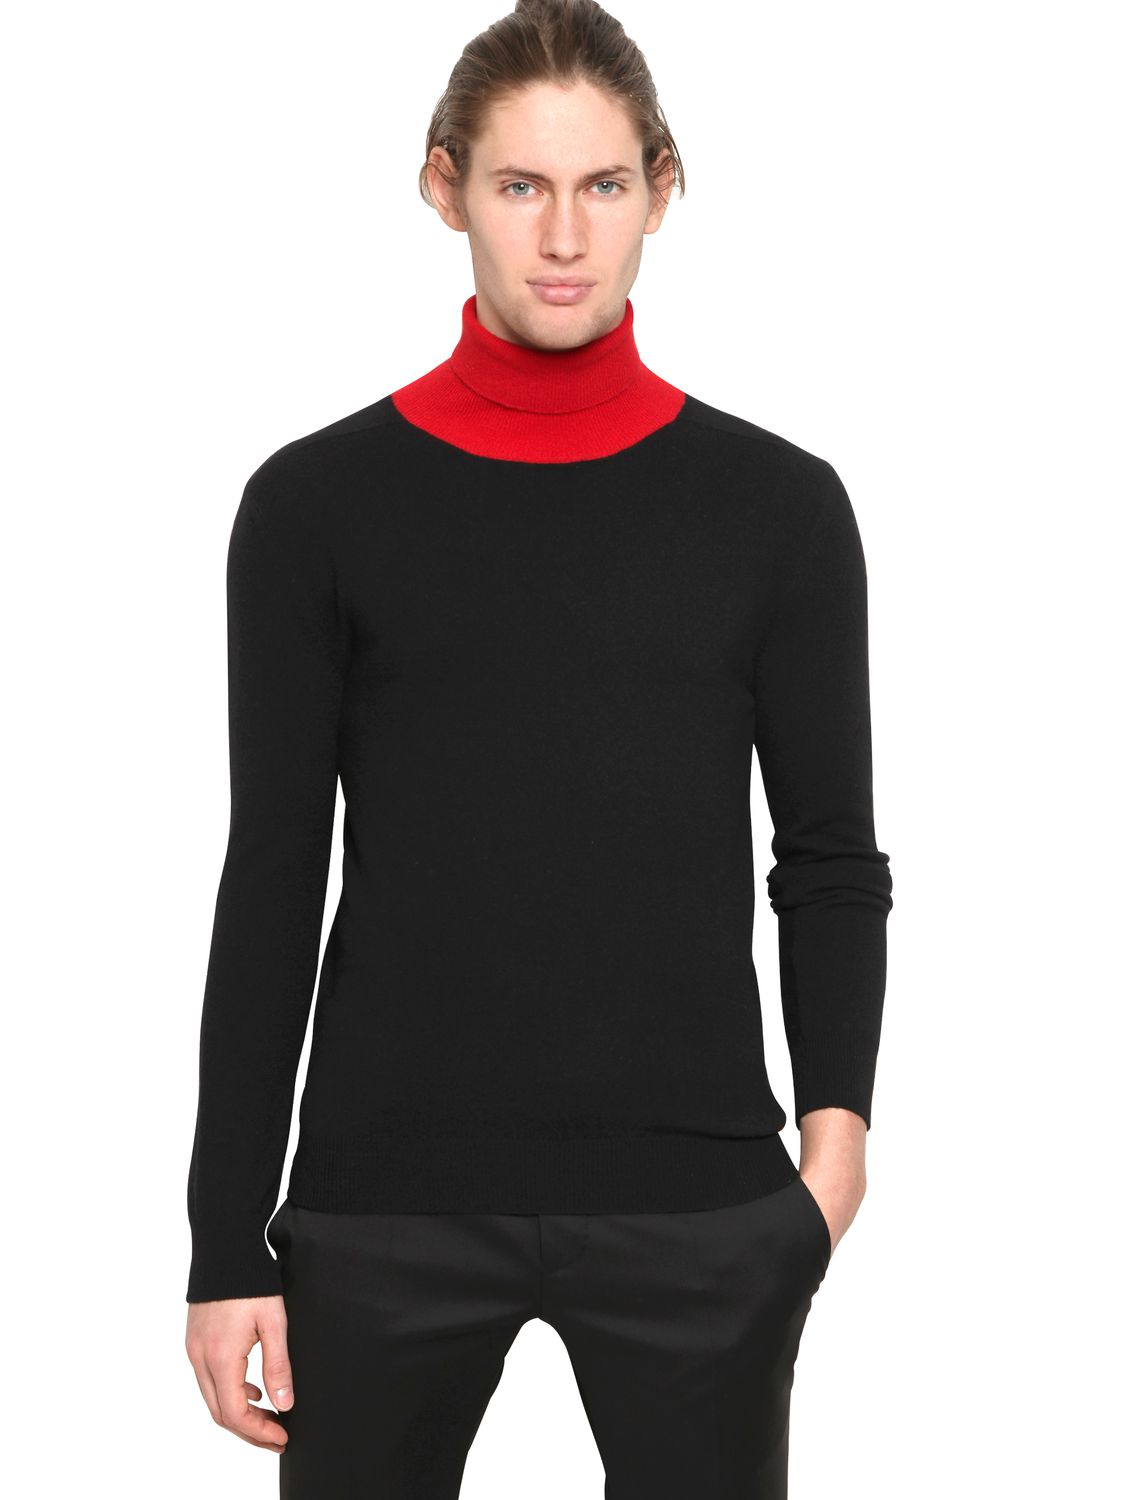 Alexander mcqueen Wool Cashmere Knit Turtleneck Sweater in Red for Men ...